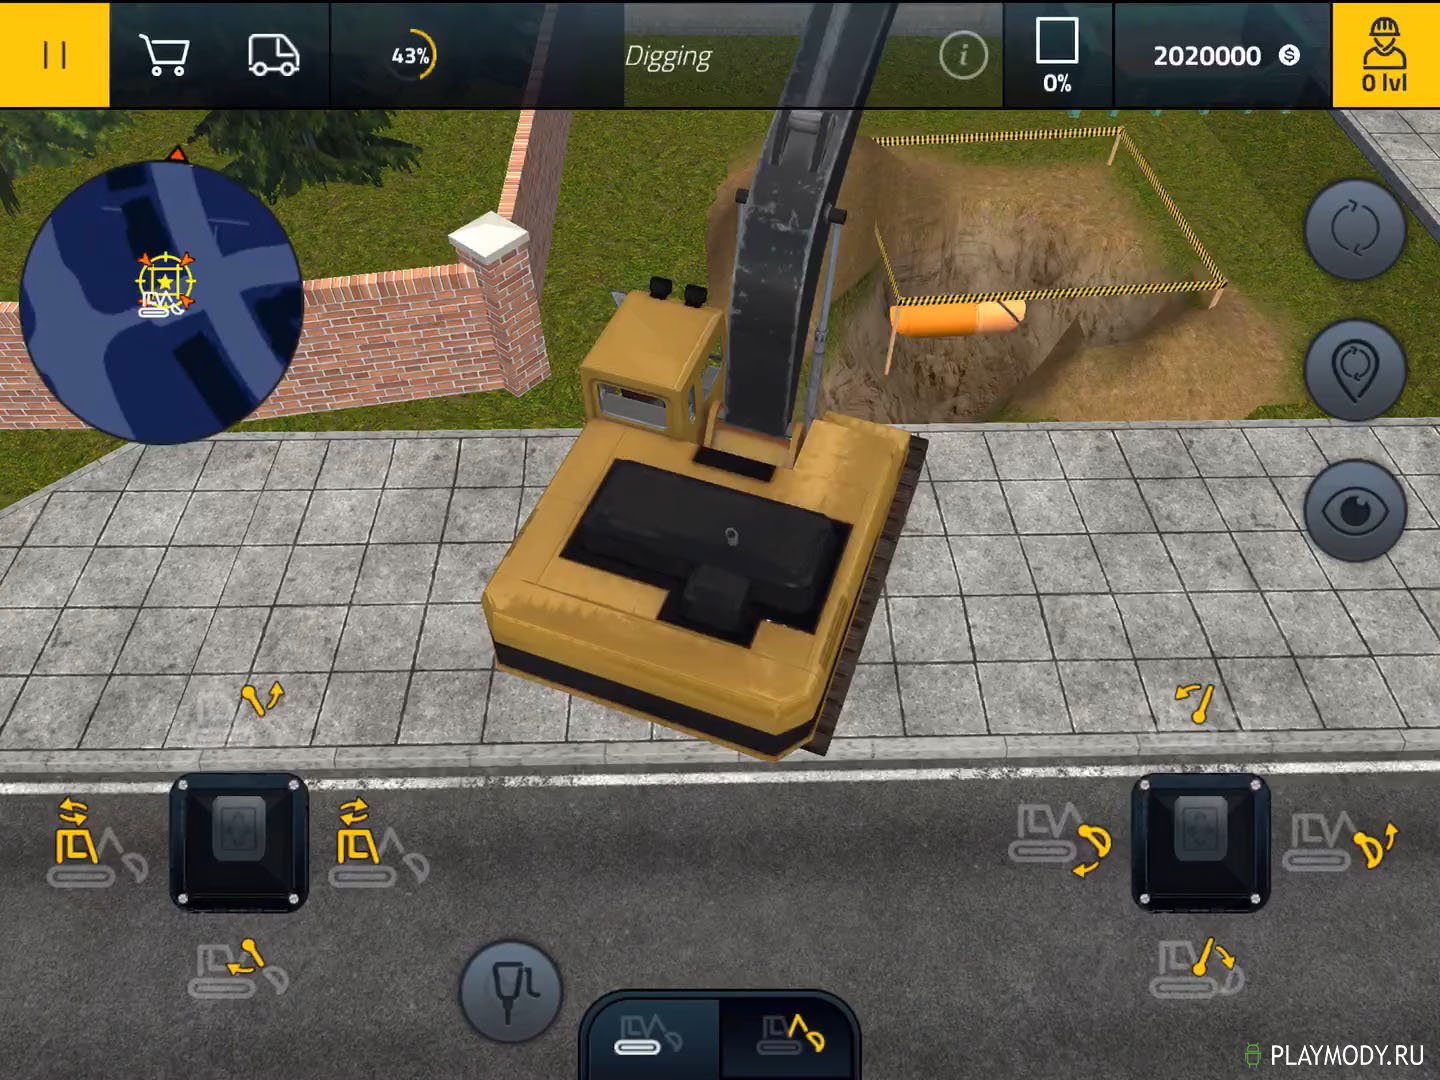 construction simulator pro 17 apk download